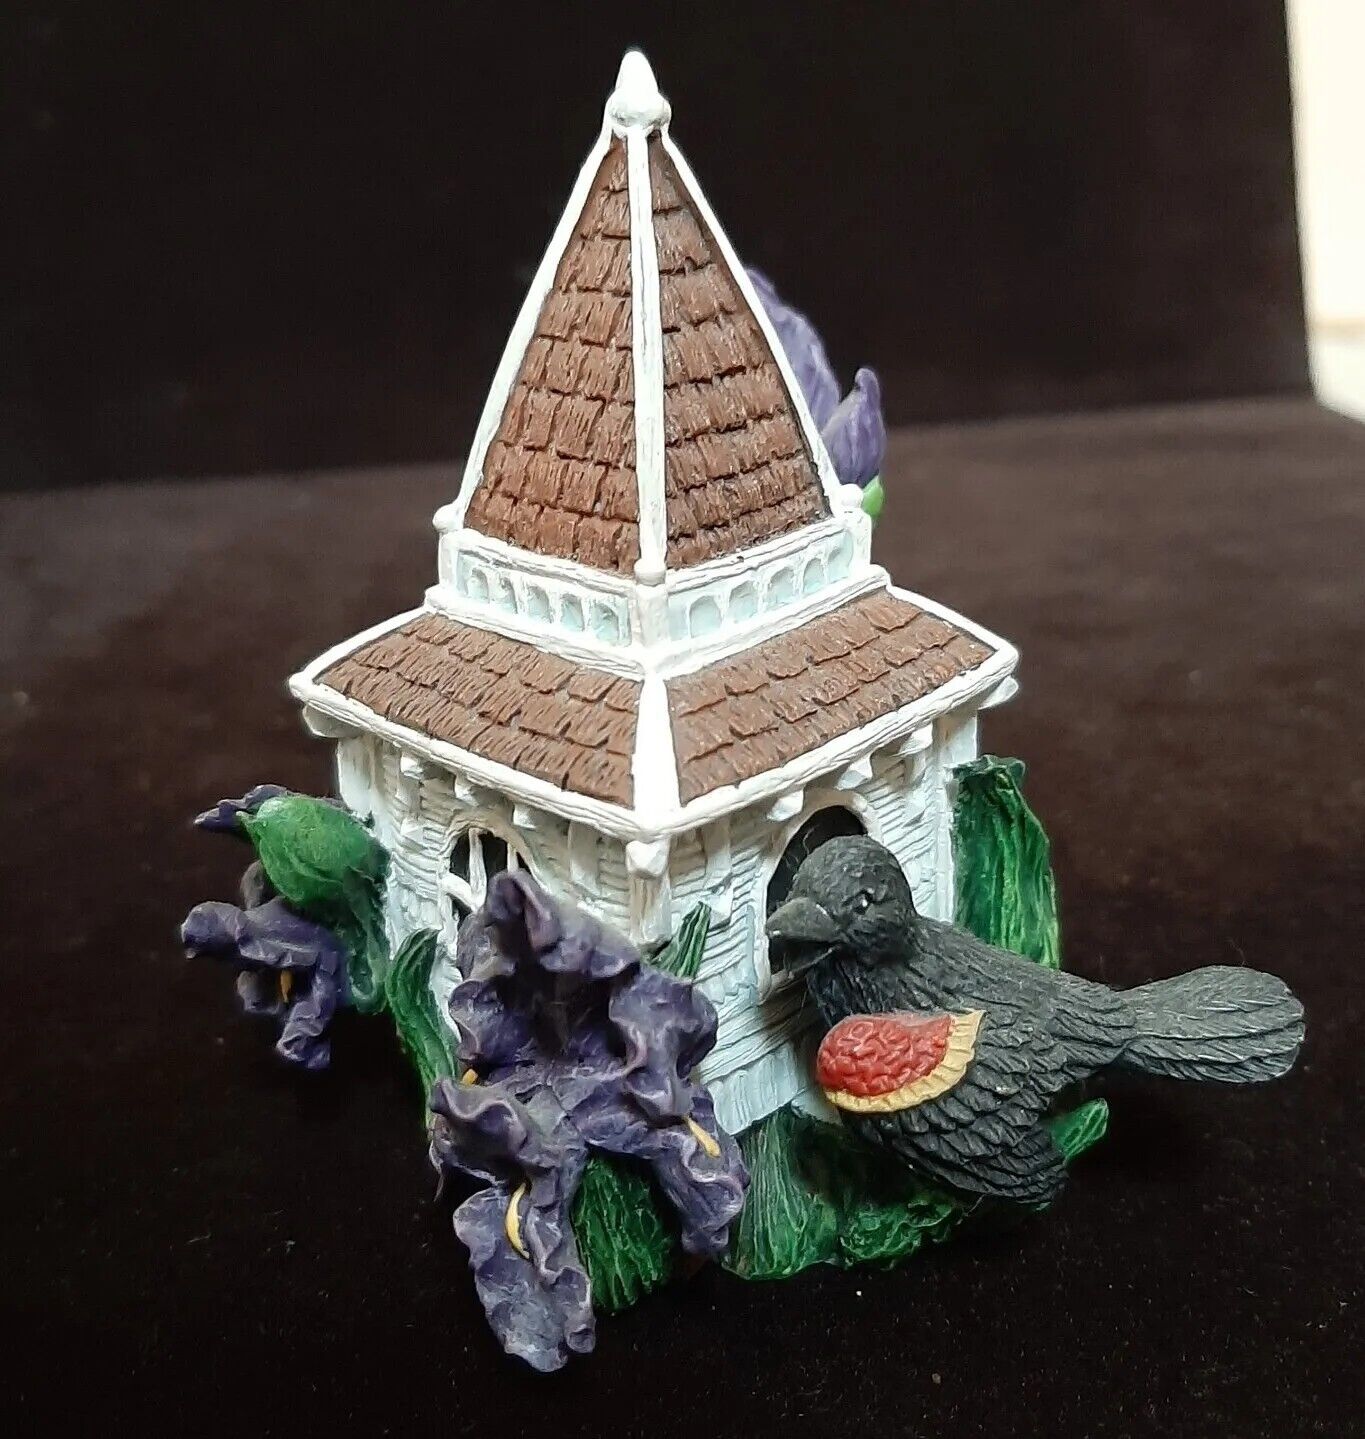 Miniature Birdhouses in Bloom Blackbird's Bower Figurine Hamilton Collection